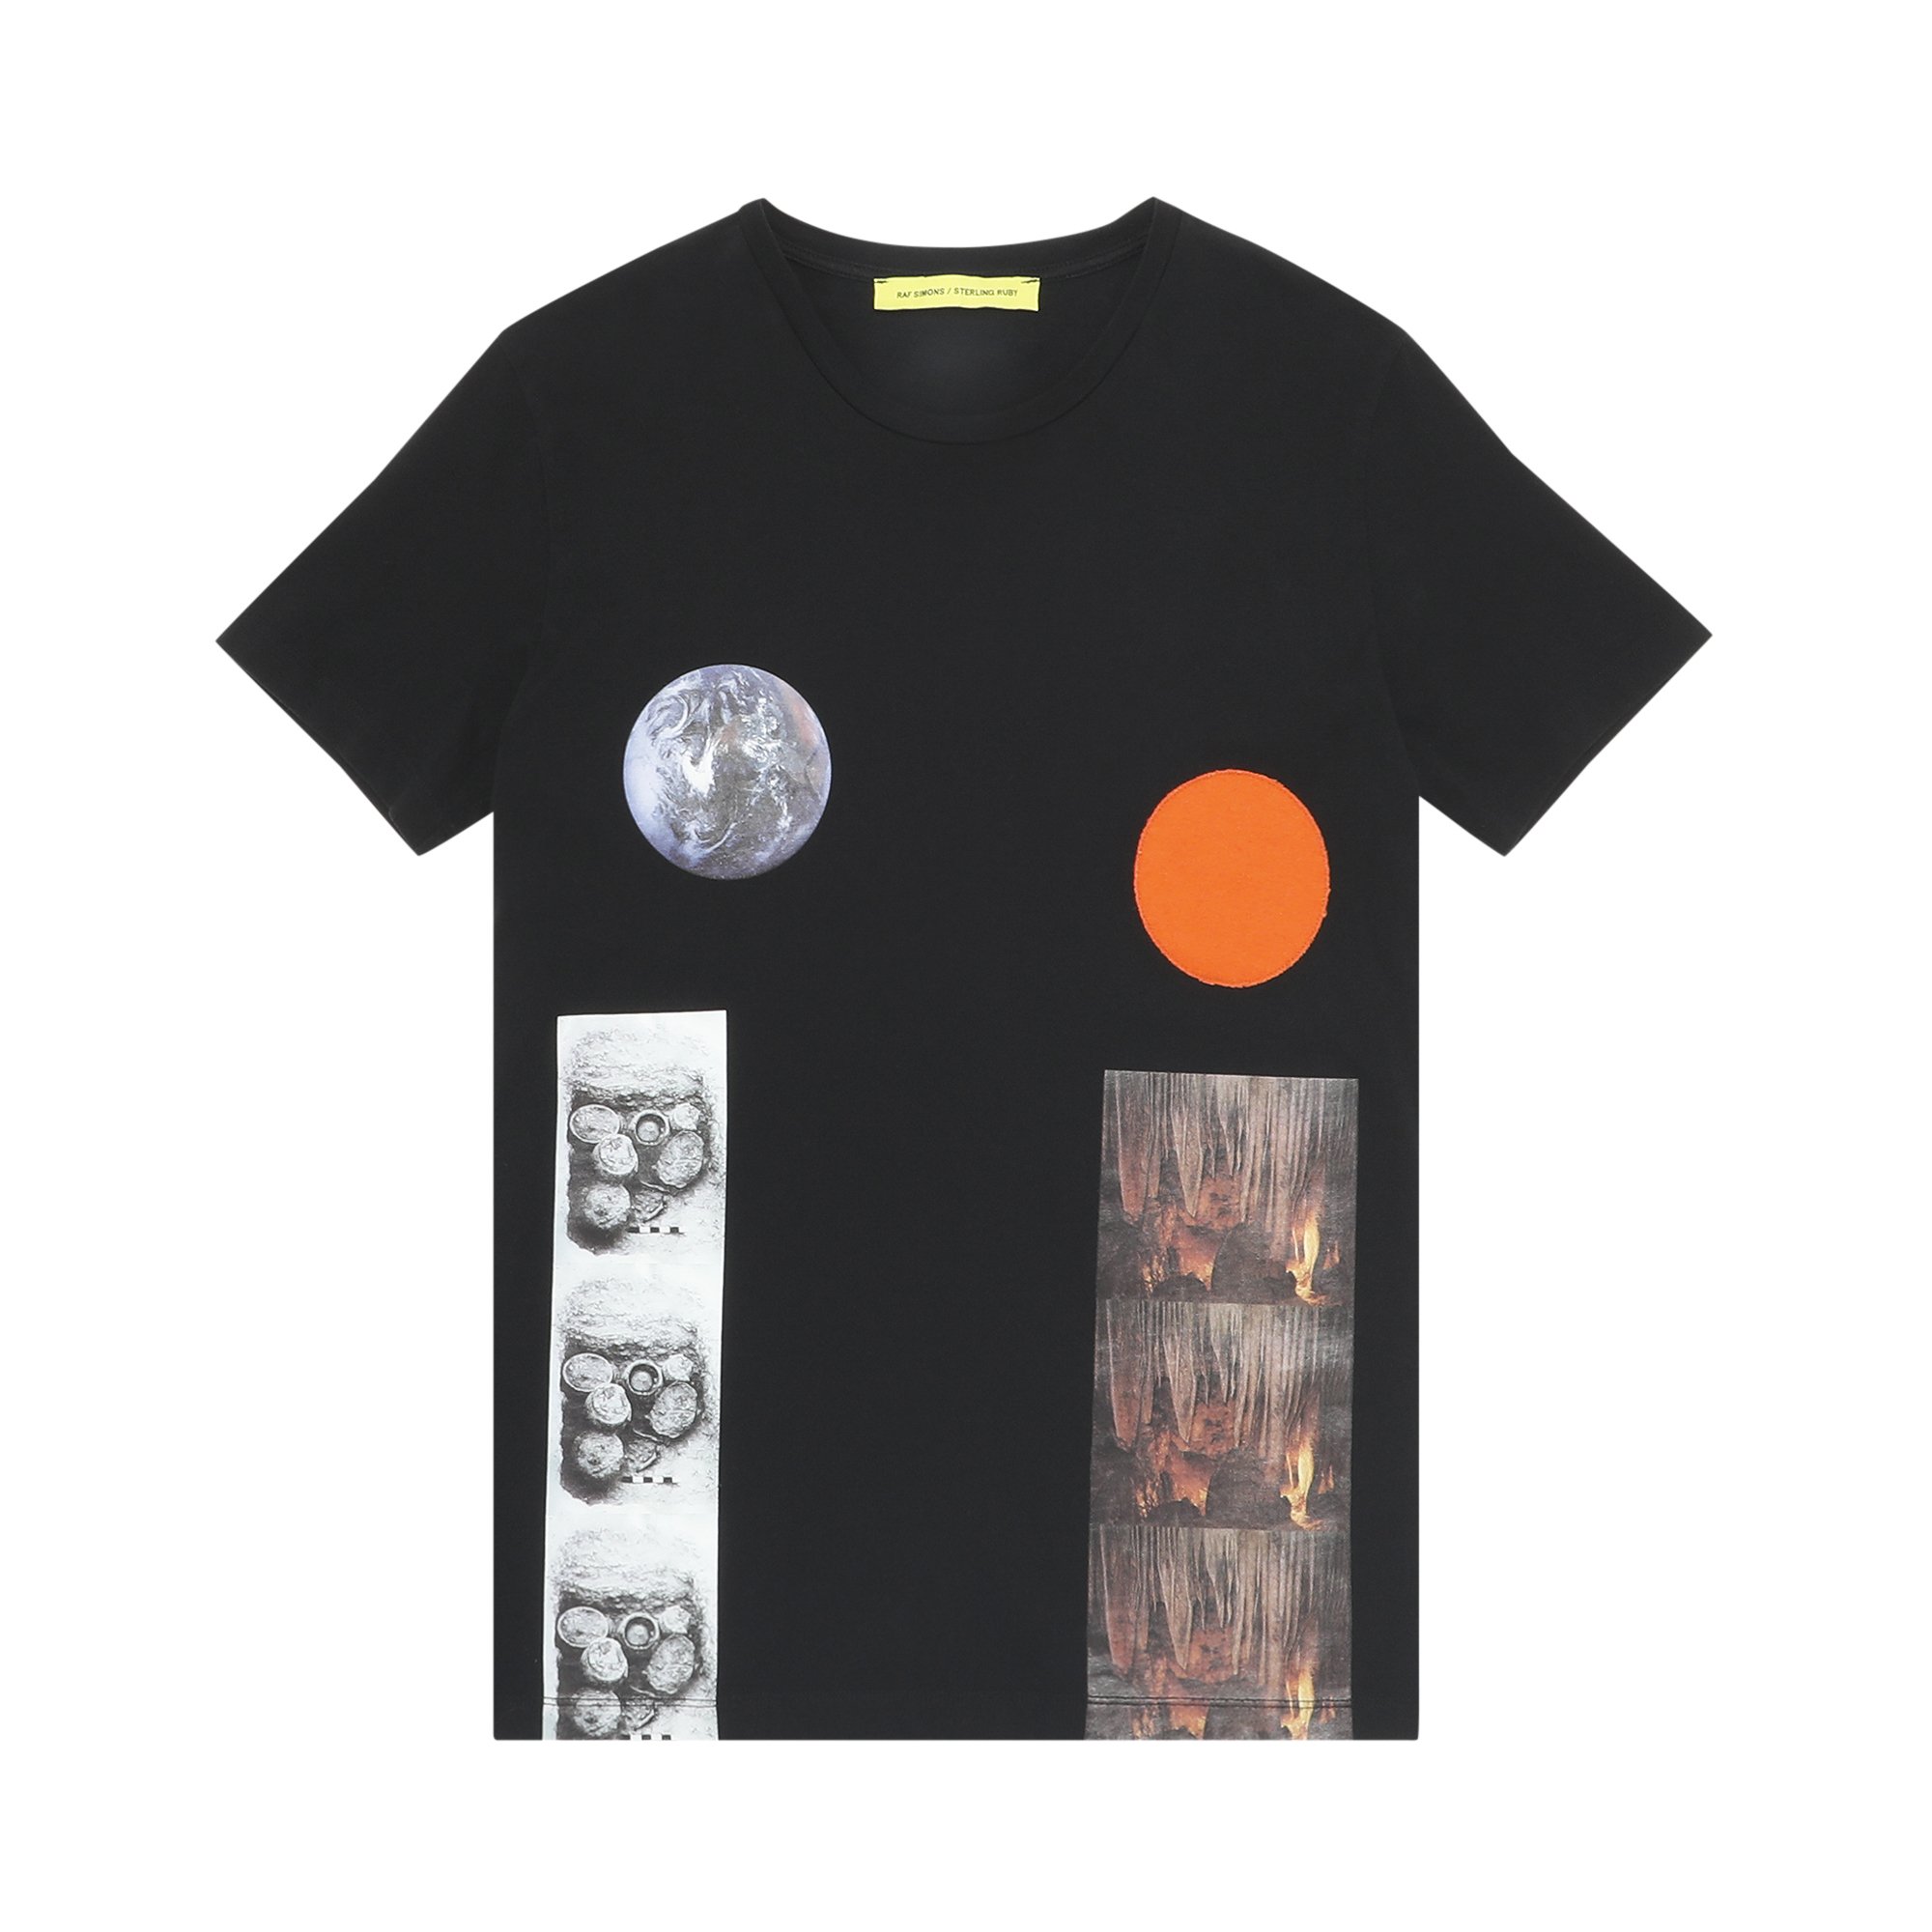 Raf Simons x Sterling Ruby Earth T-Shirt 'Black' | GOAT